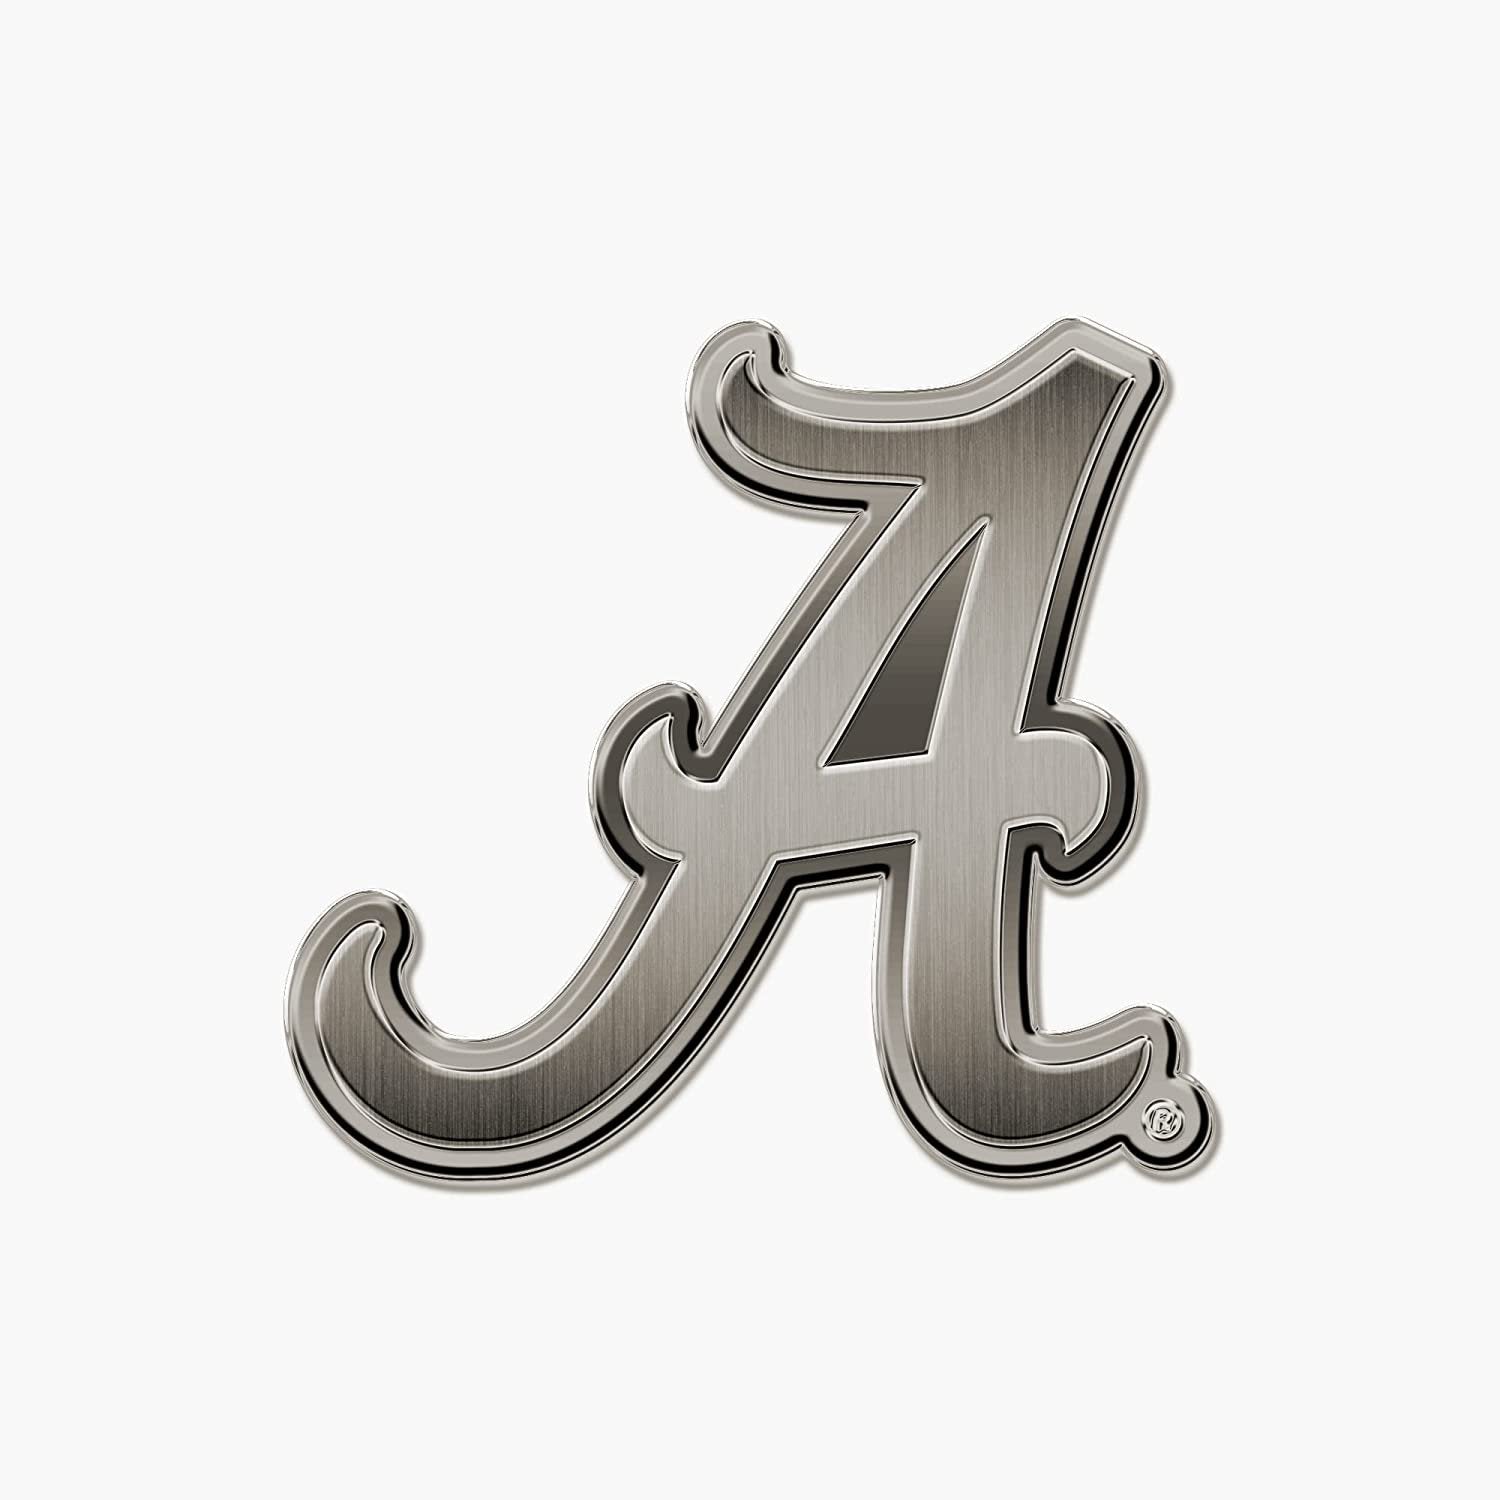 University of Alabama Crimson Tide Solid Metal Auto Emblem, Silver Chrome Color, Antique Nickel Design, Raised, 3.5 Inch, Adhesive Tape Backing